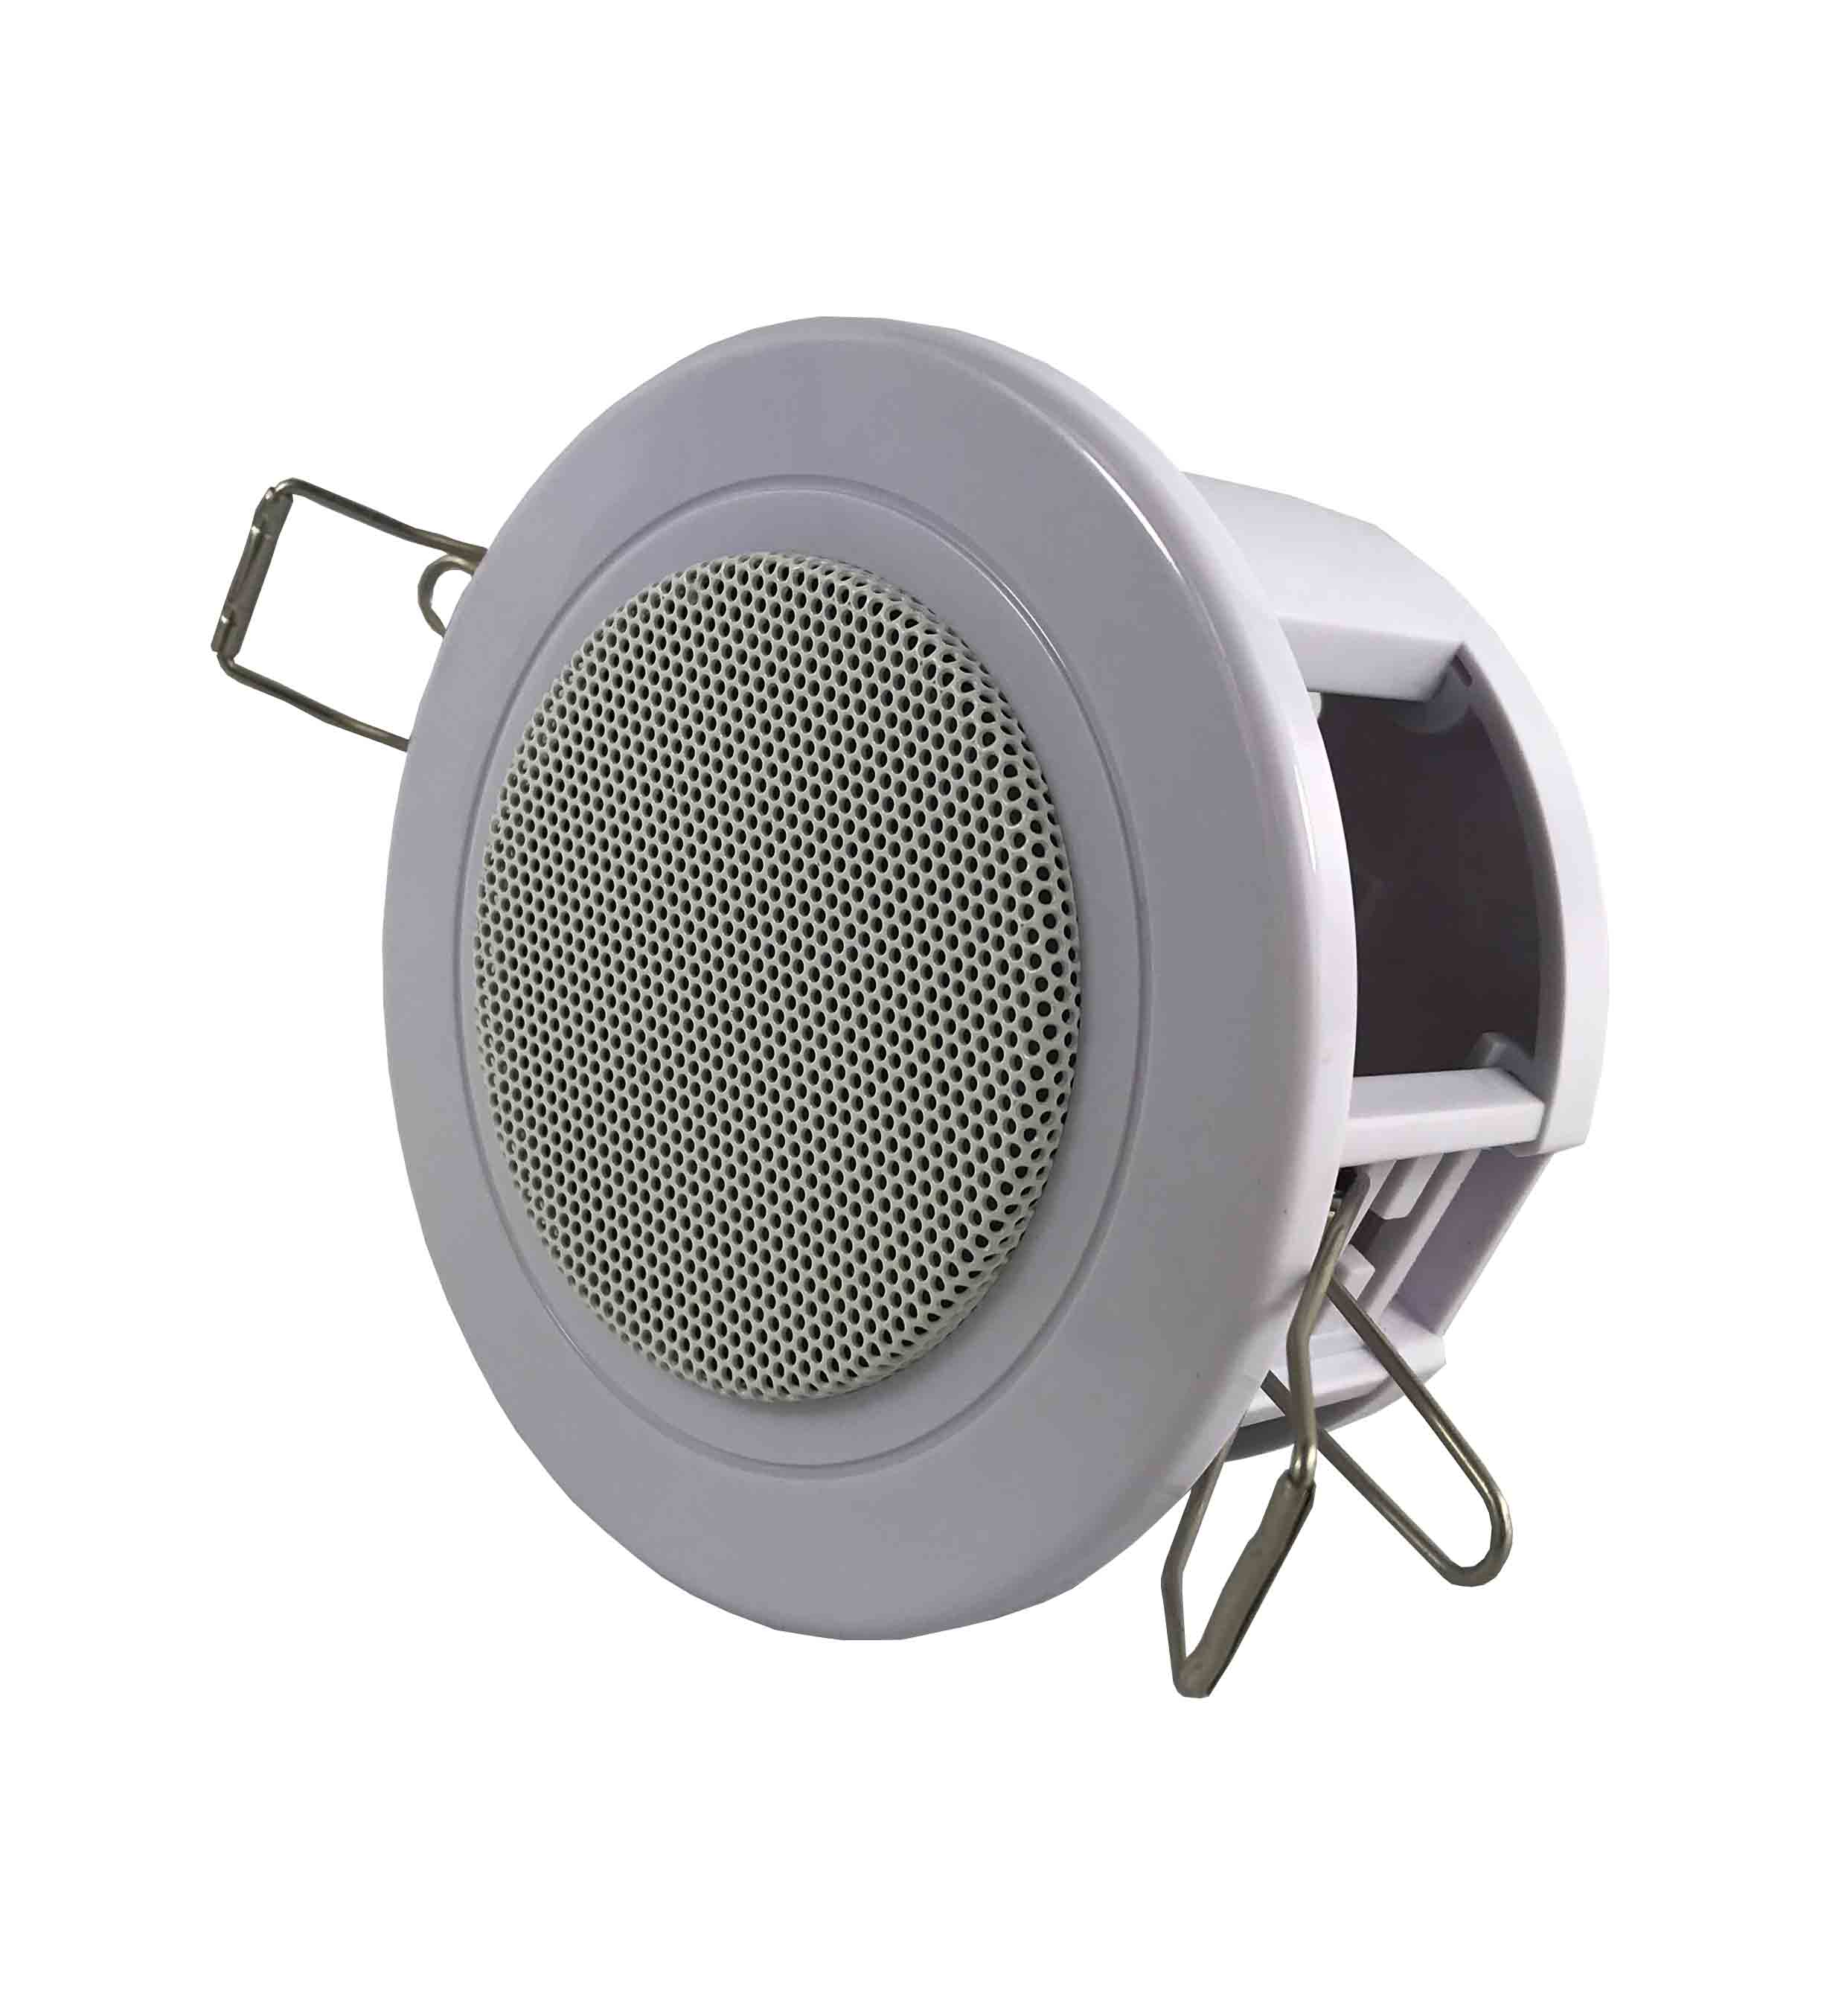 CL-513 Ceiling speaker